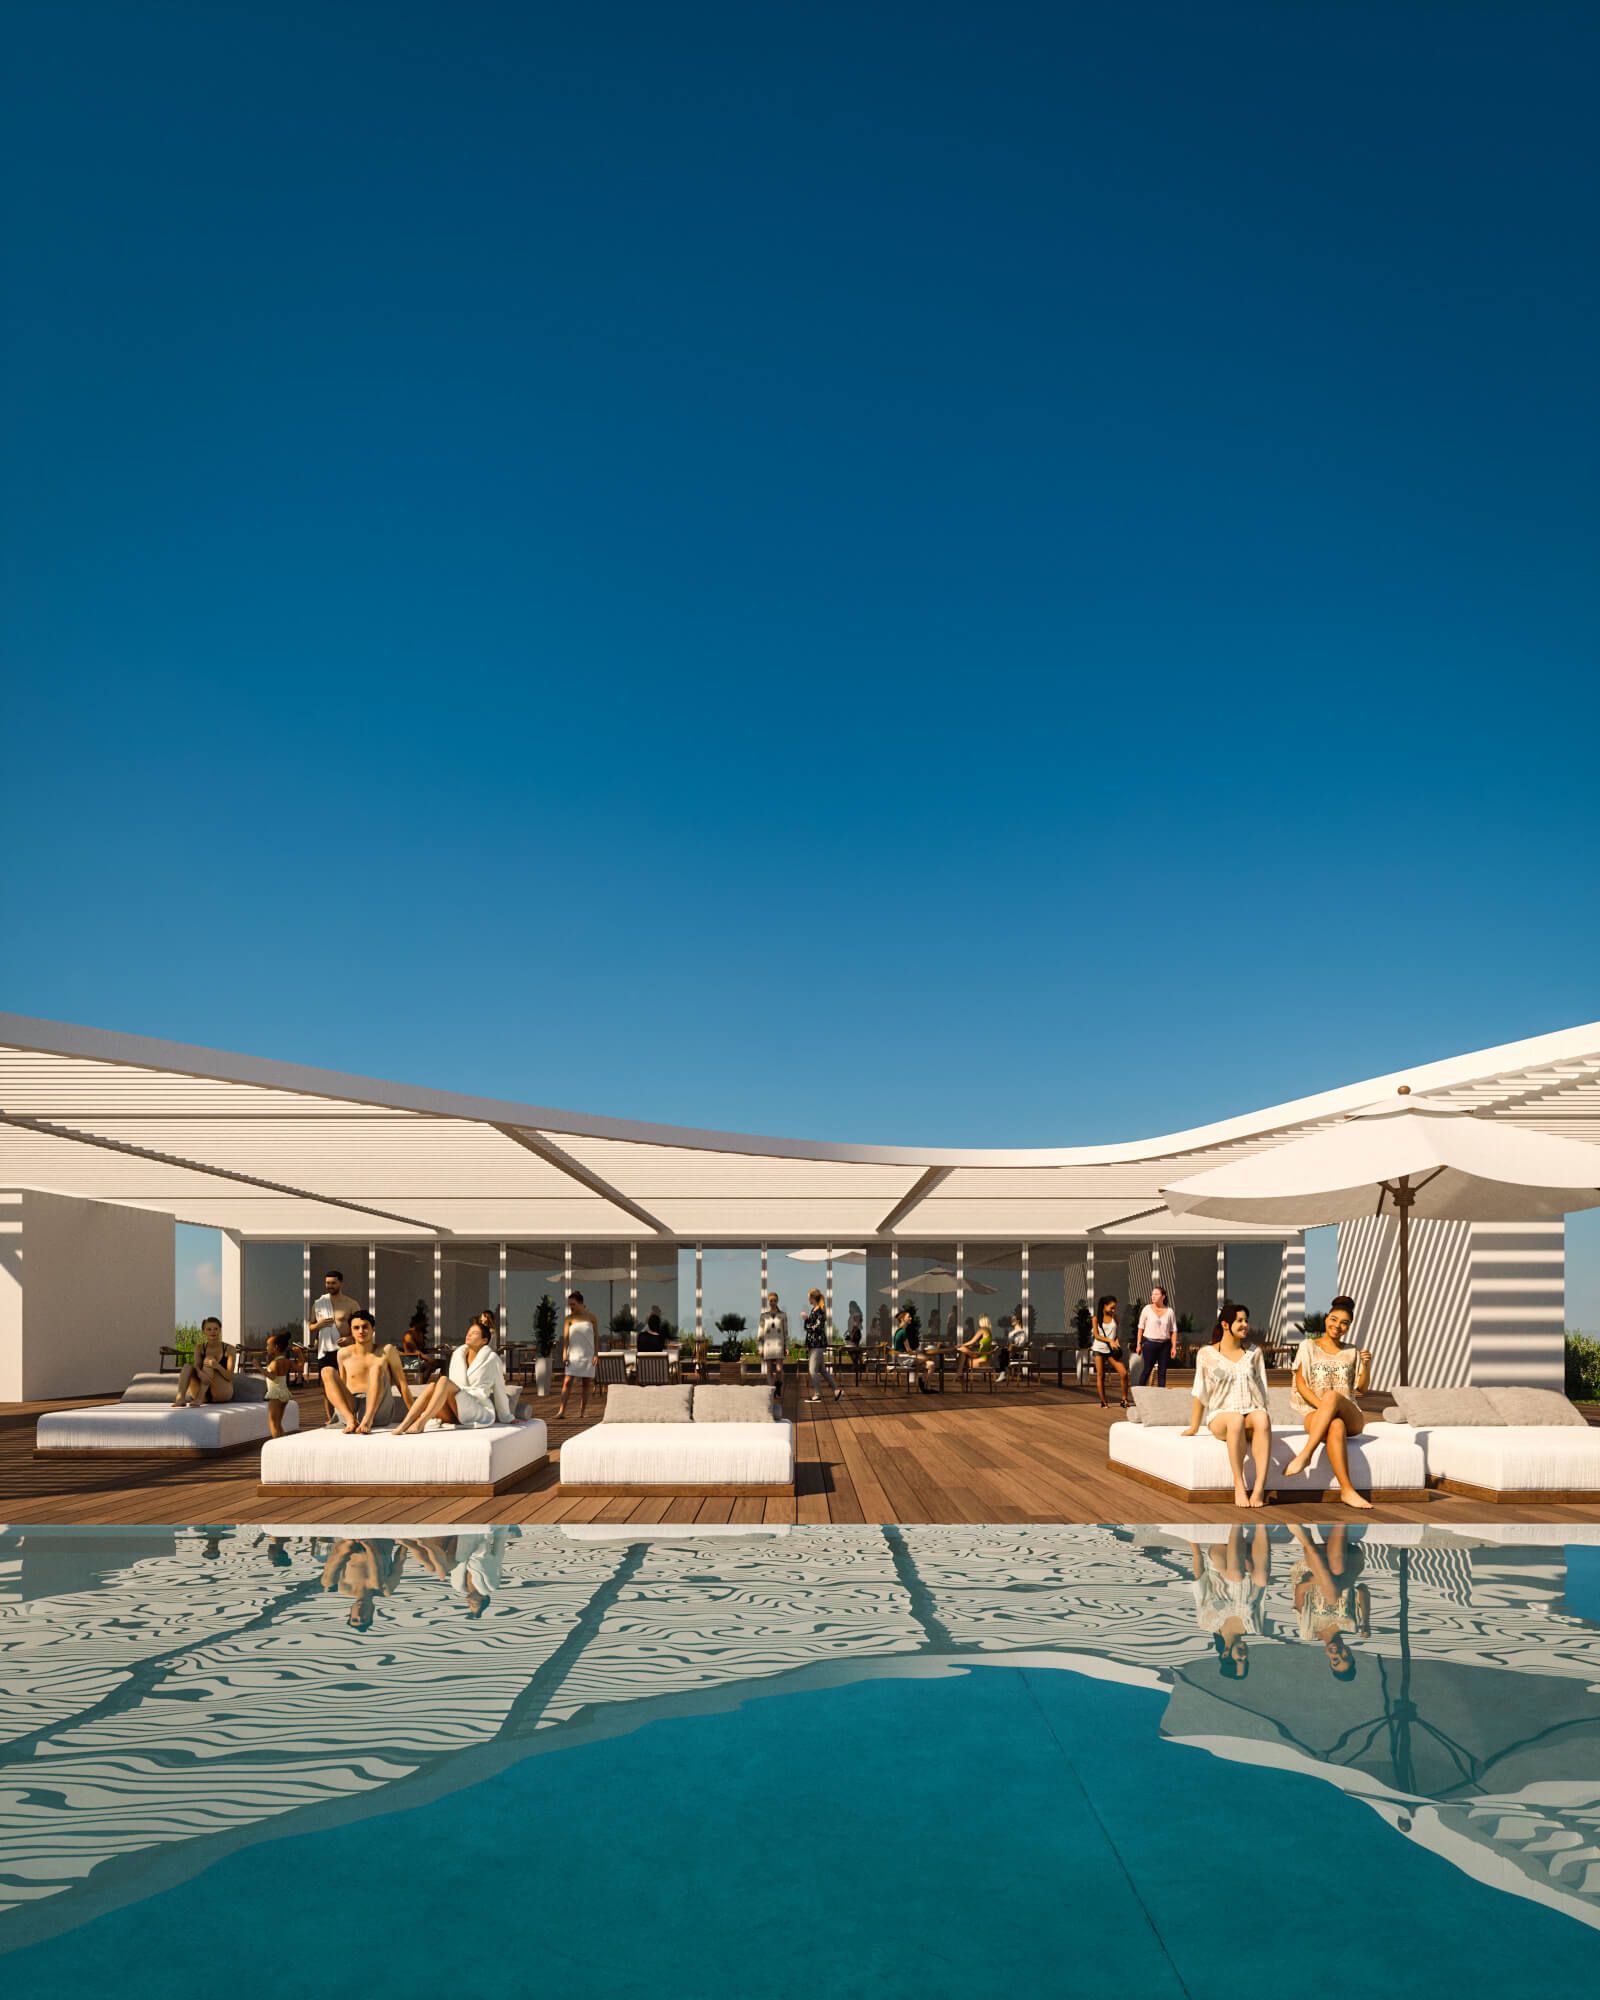 Portugal Golden Visa - Rooftop pool